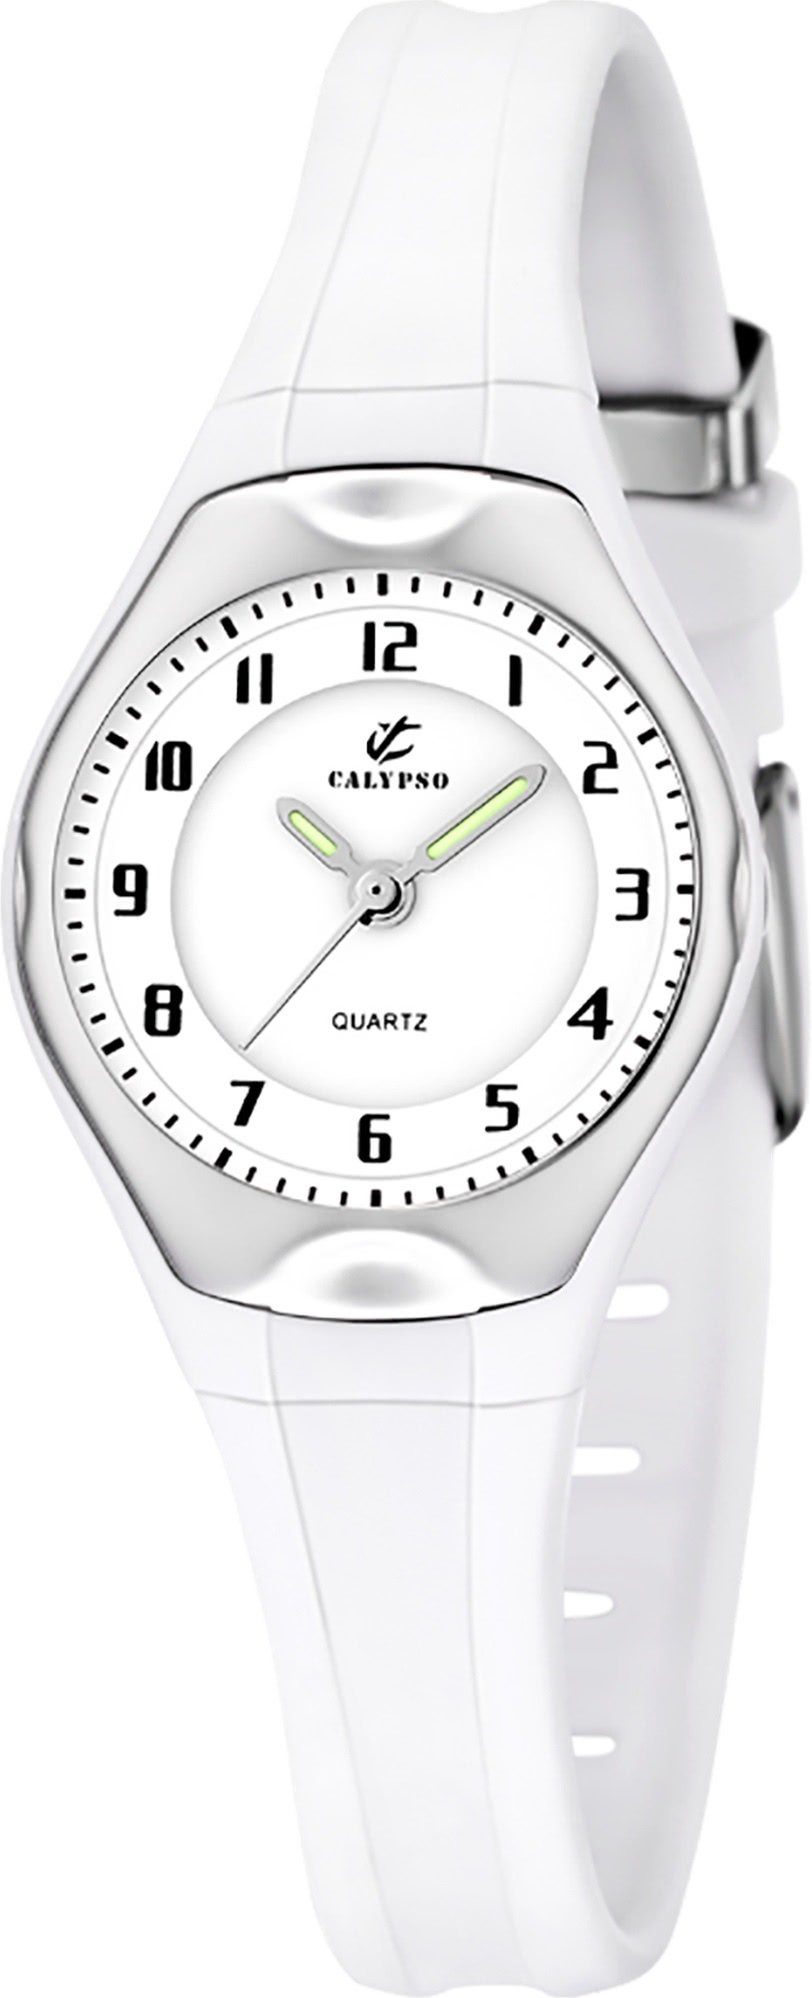 CALYPSO WATCHES Quarzuhr Calypso Kinder Uhr Casual Kinder rund, K5163/H weiß, Kautschukarmband Kunststoffband, Armbanduhr